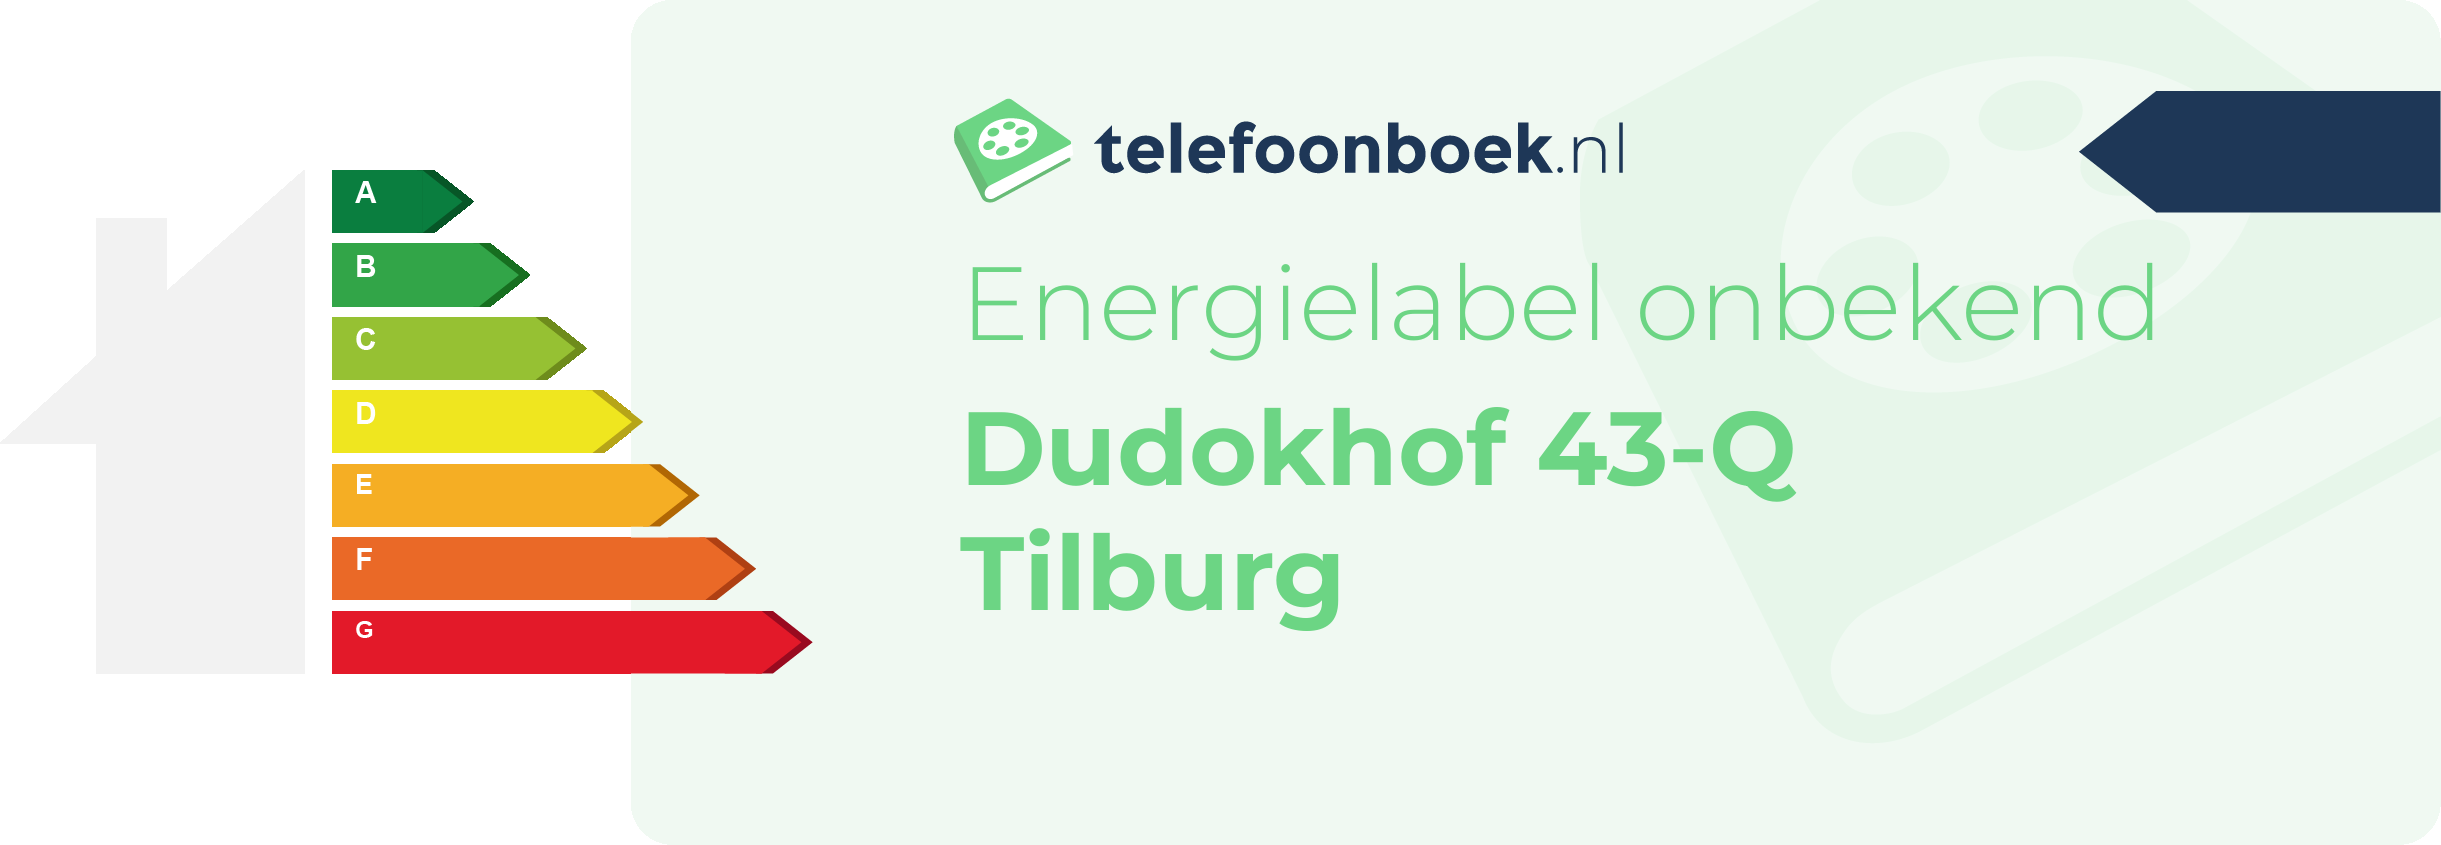 Energielabel Dudokhof 43-Q Tilburg